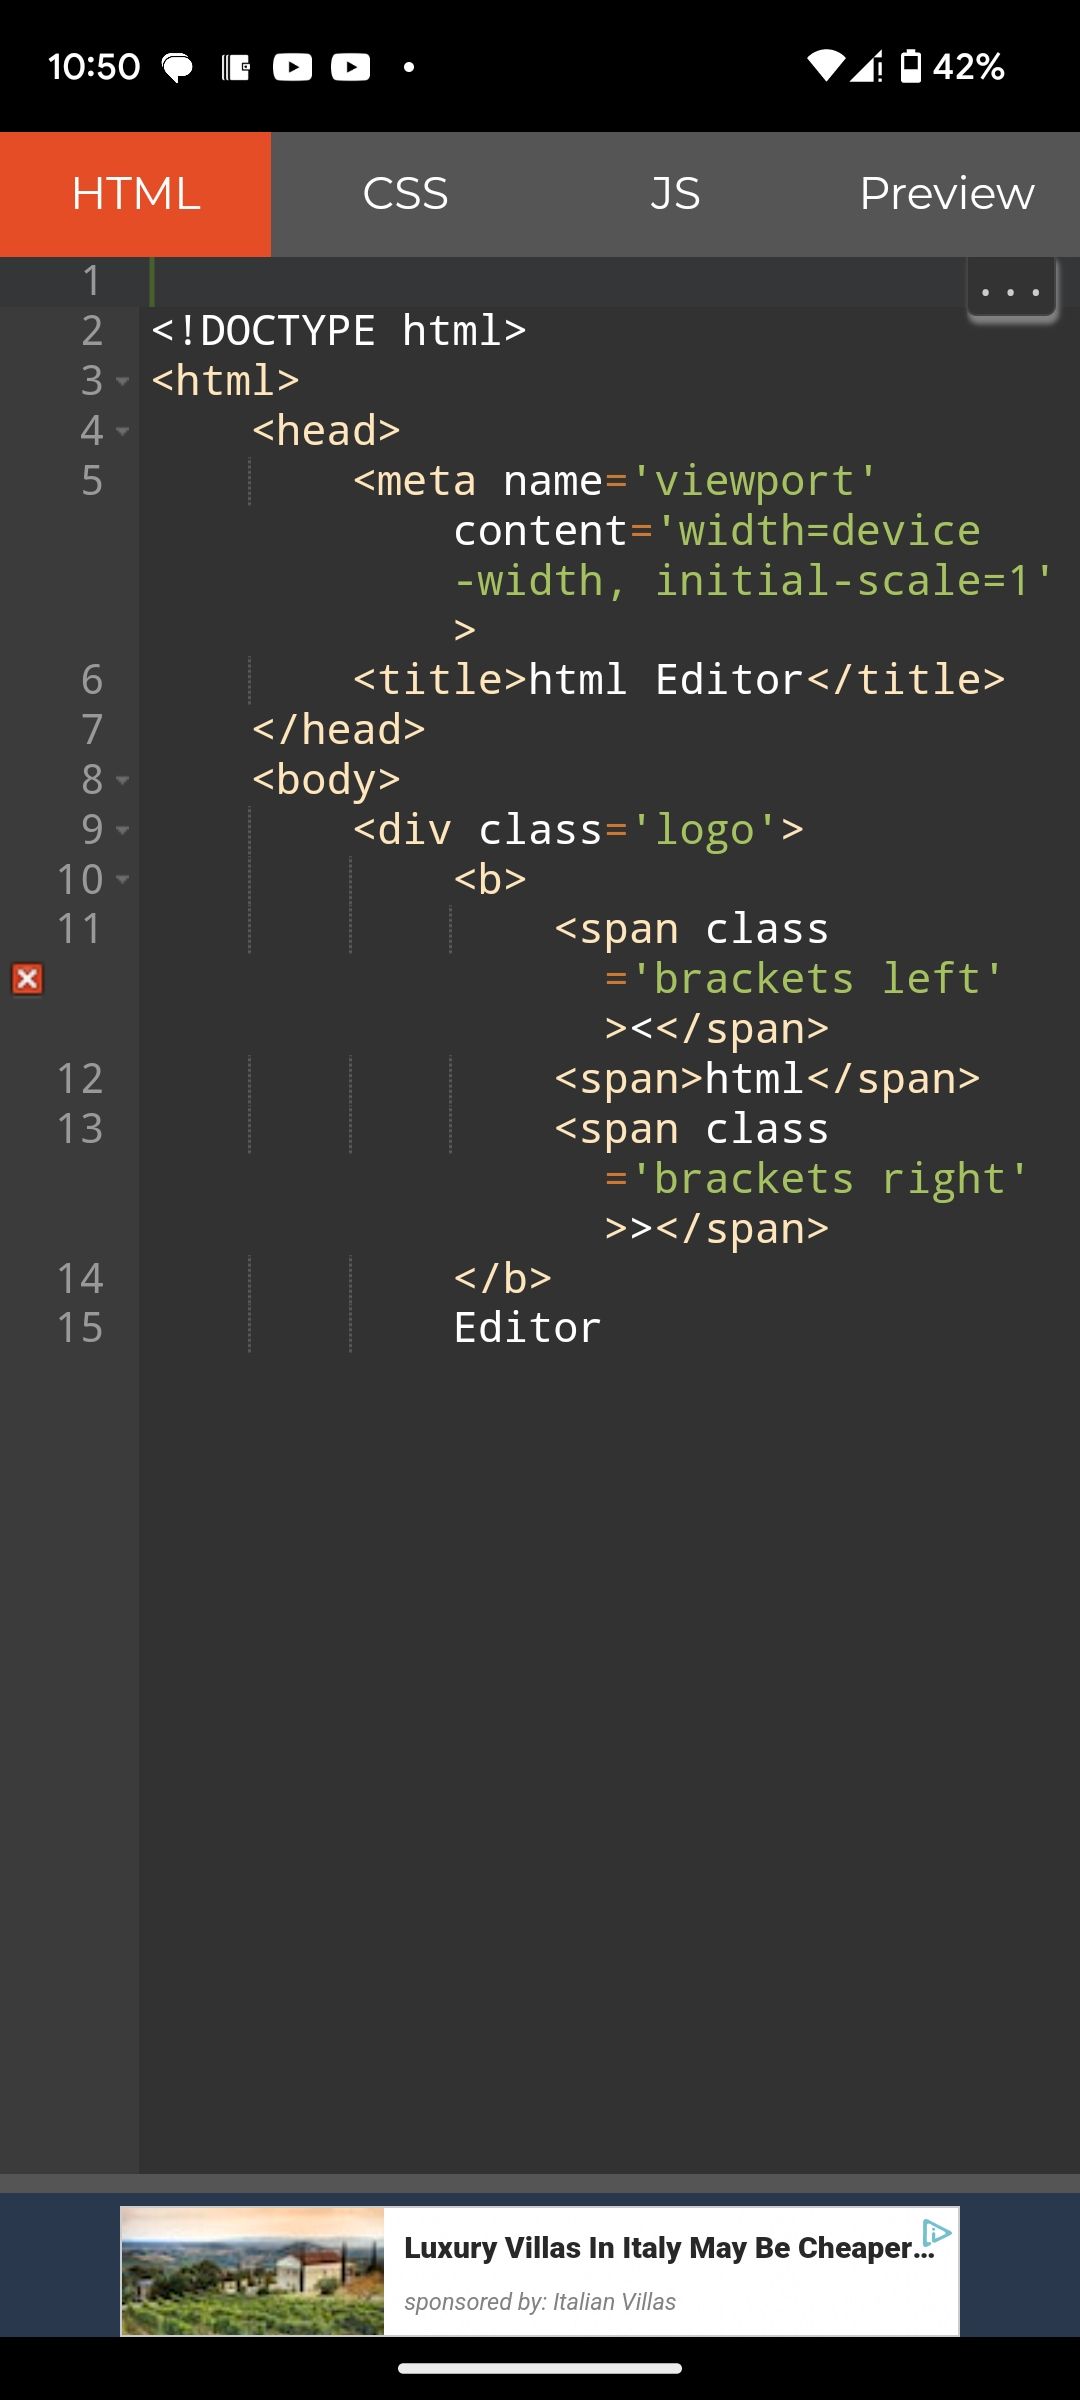 Editing HTML files in HTML Editor